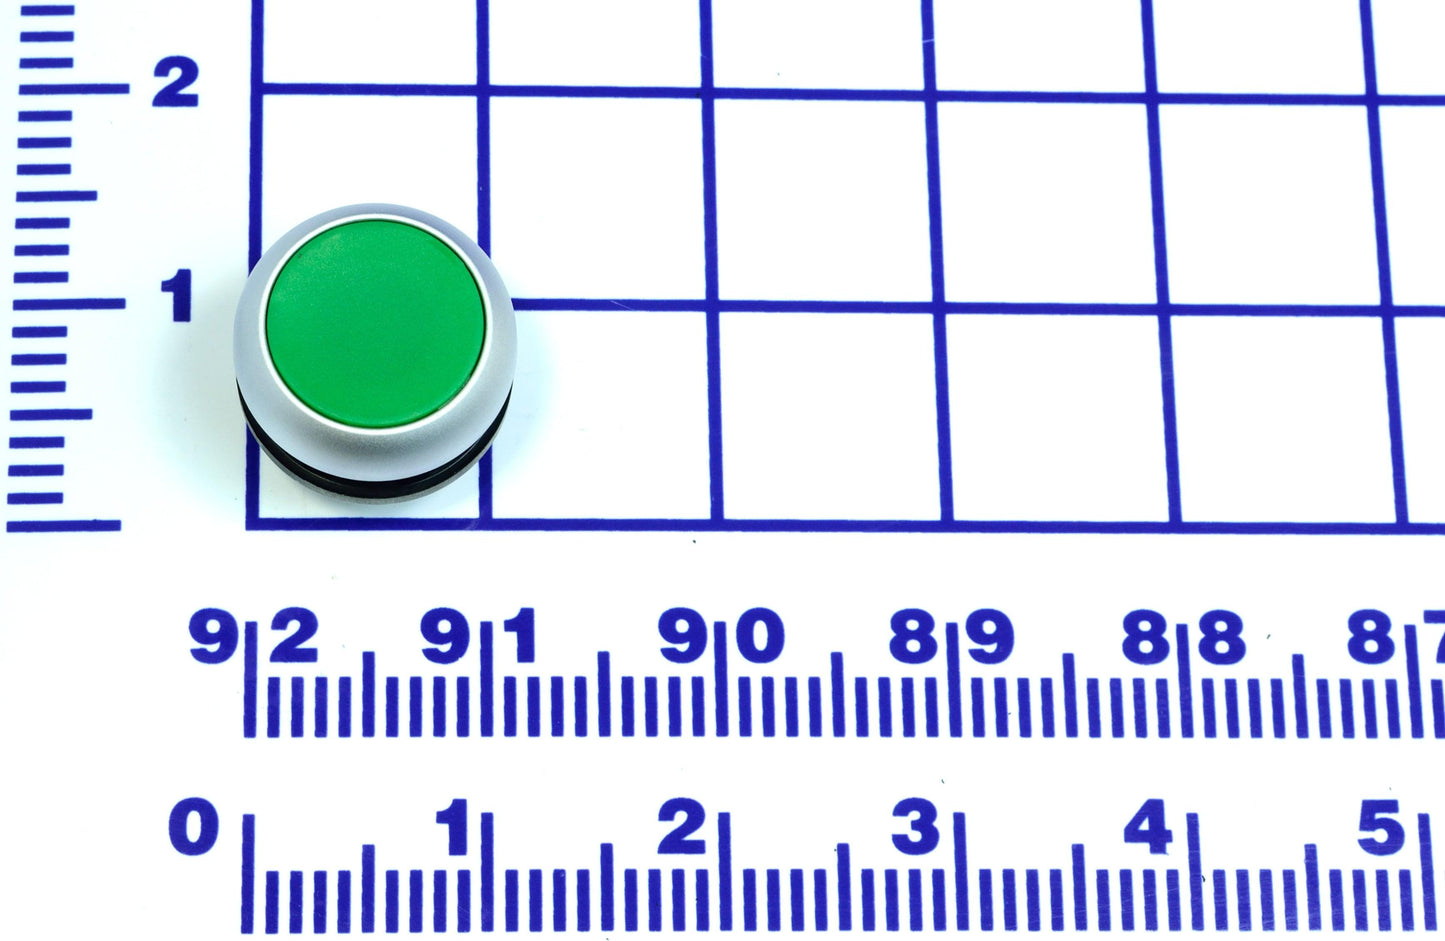 MF2-089-001 Green Push Button - Nova